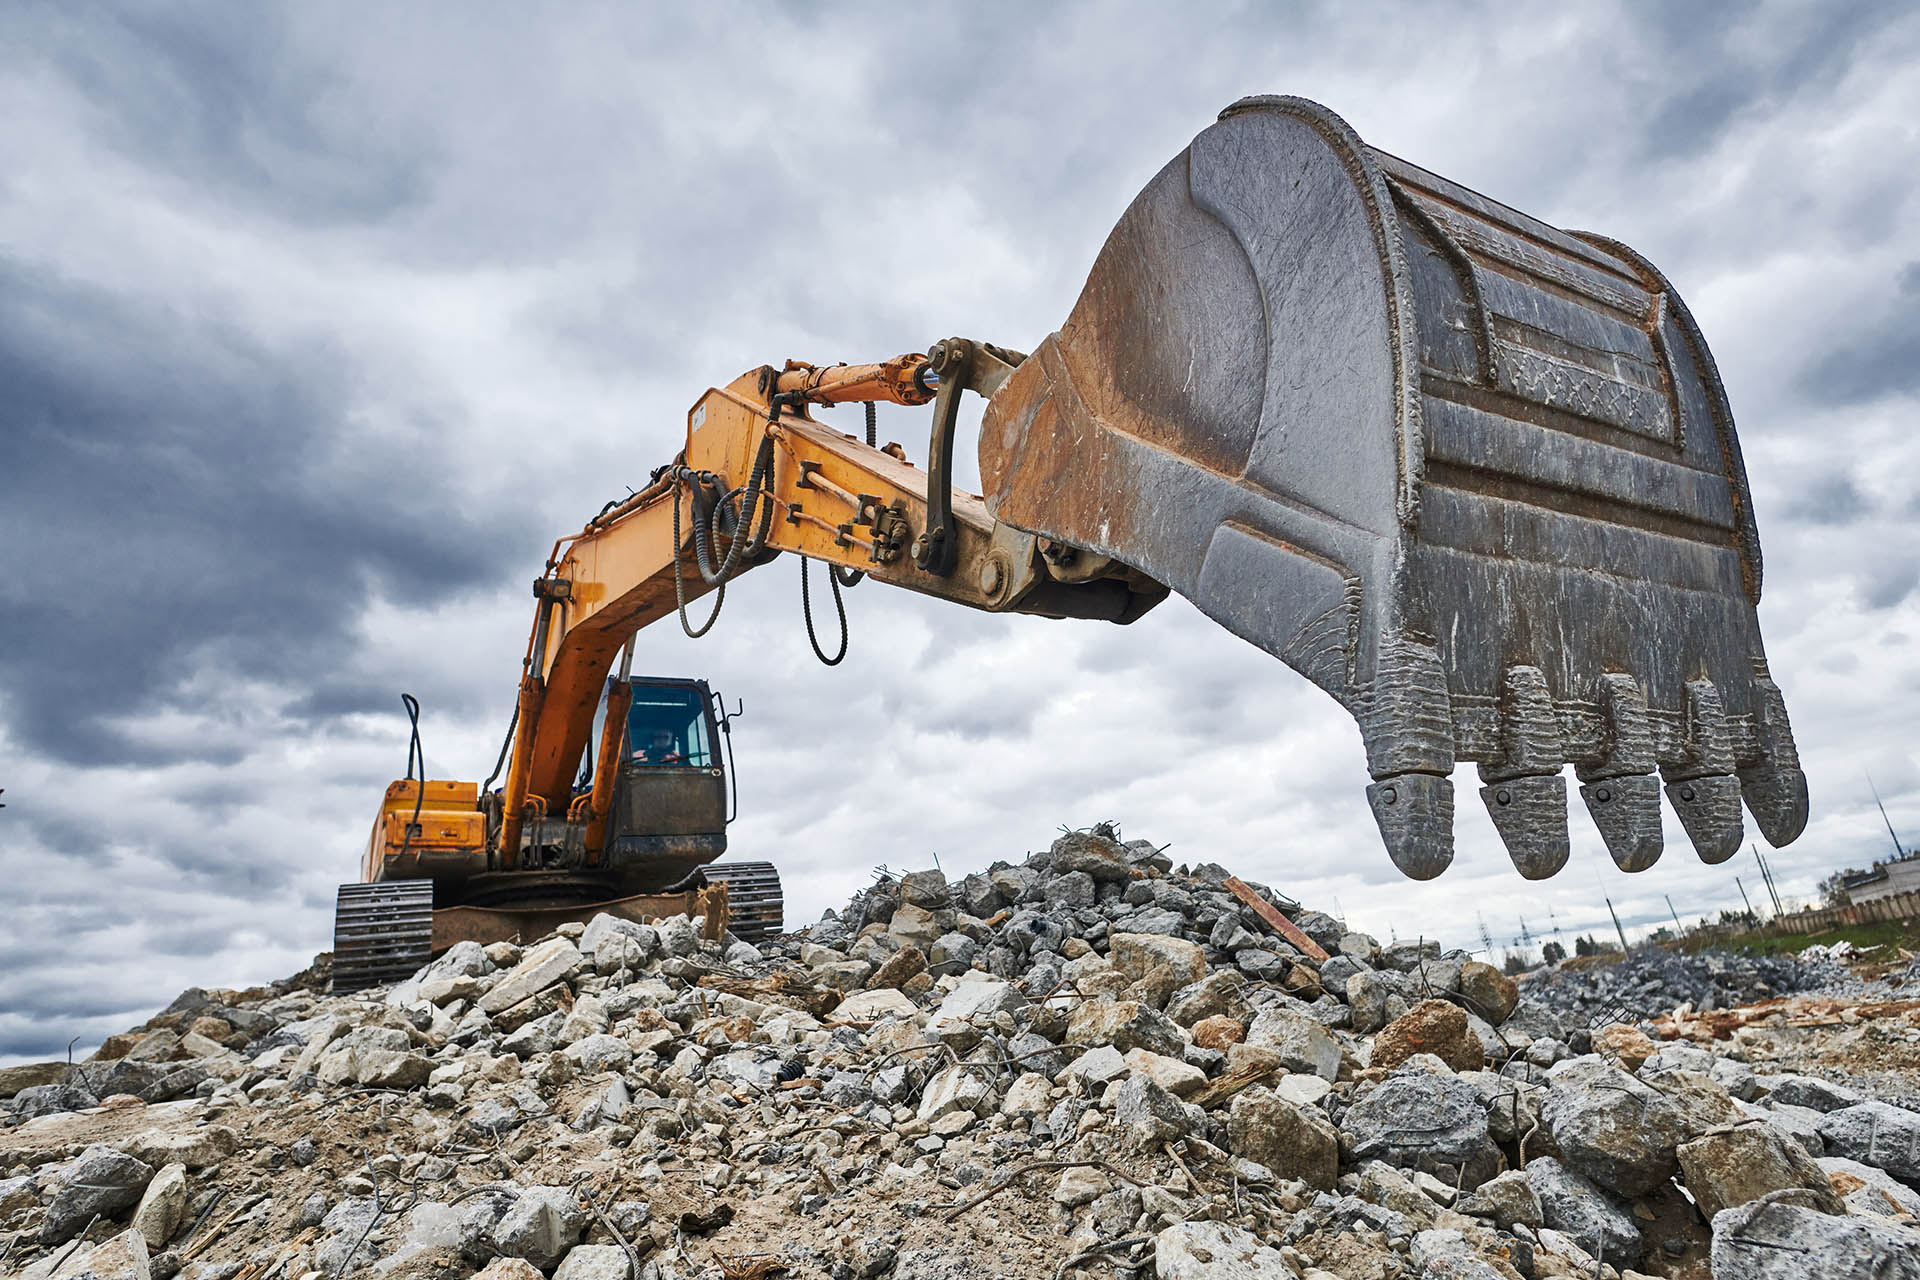 excavator loader machine at demolition or destroying works outdoors on construction site